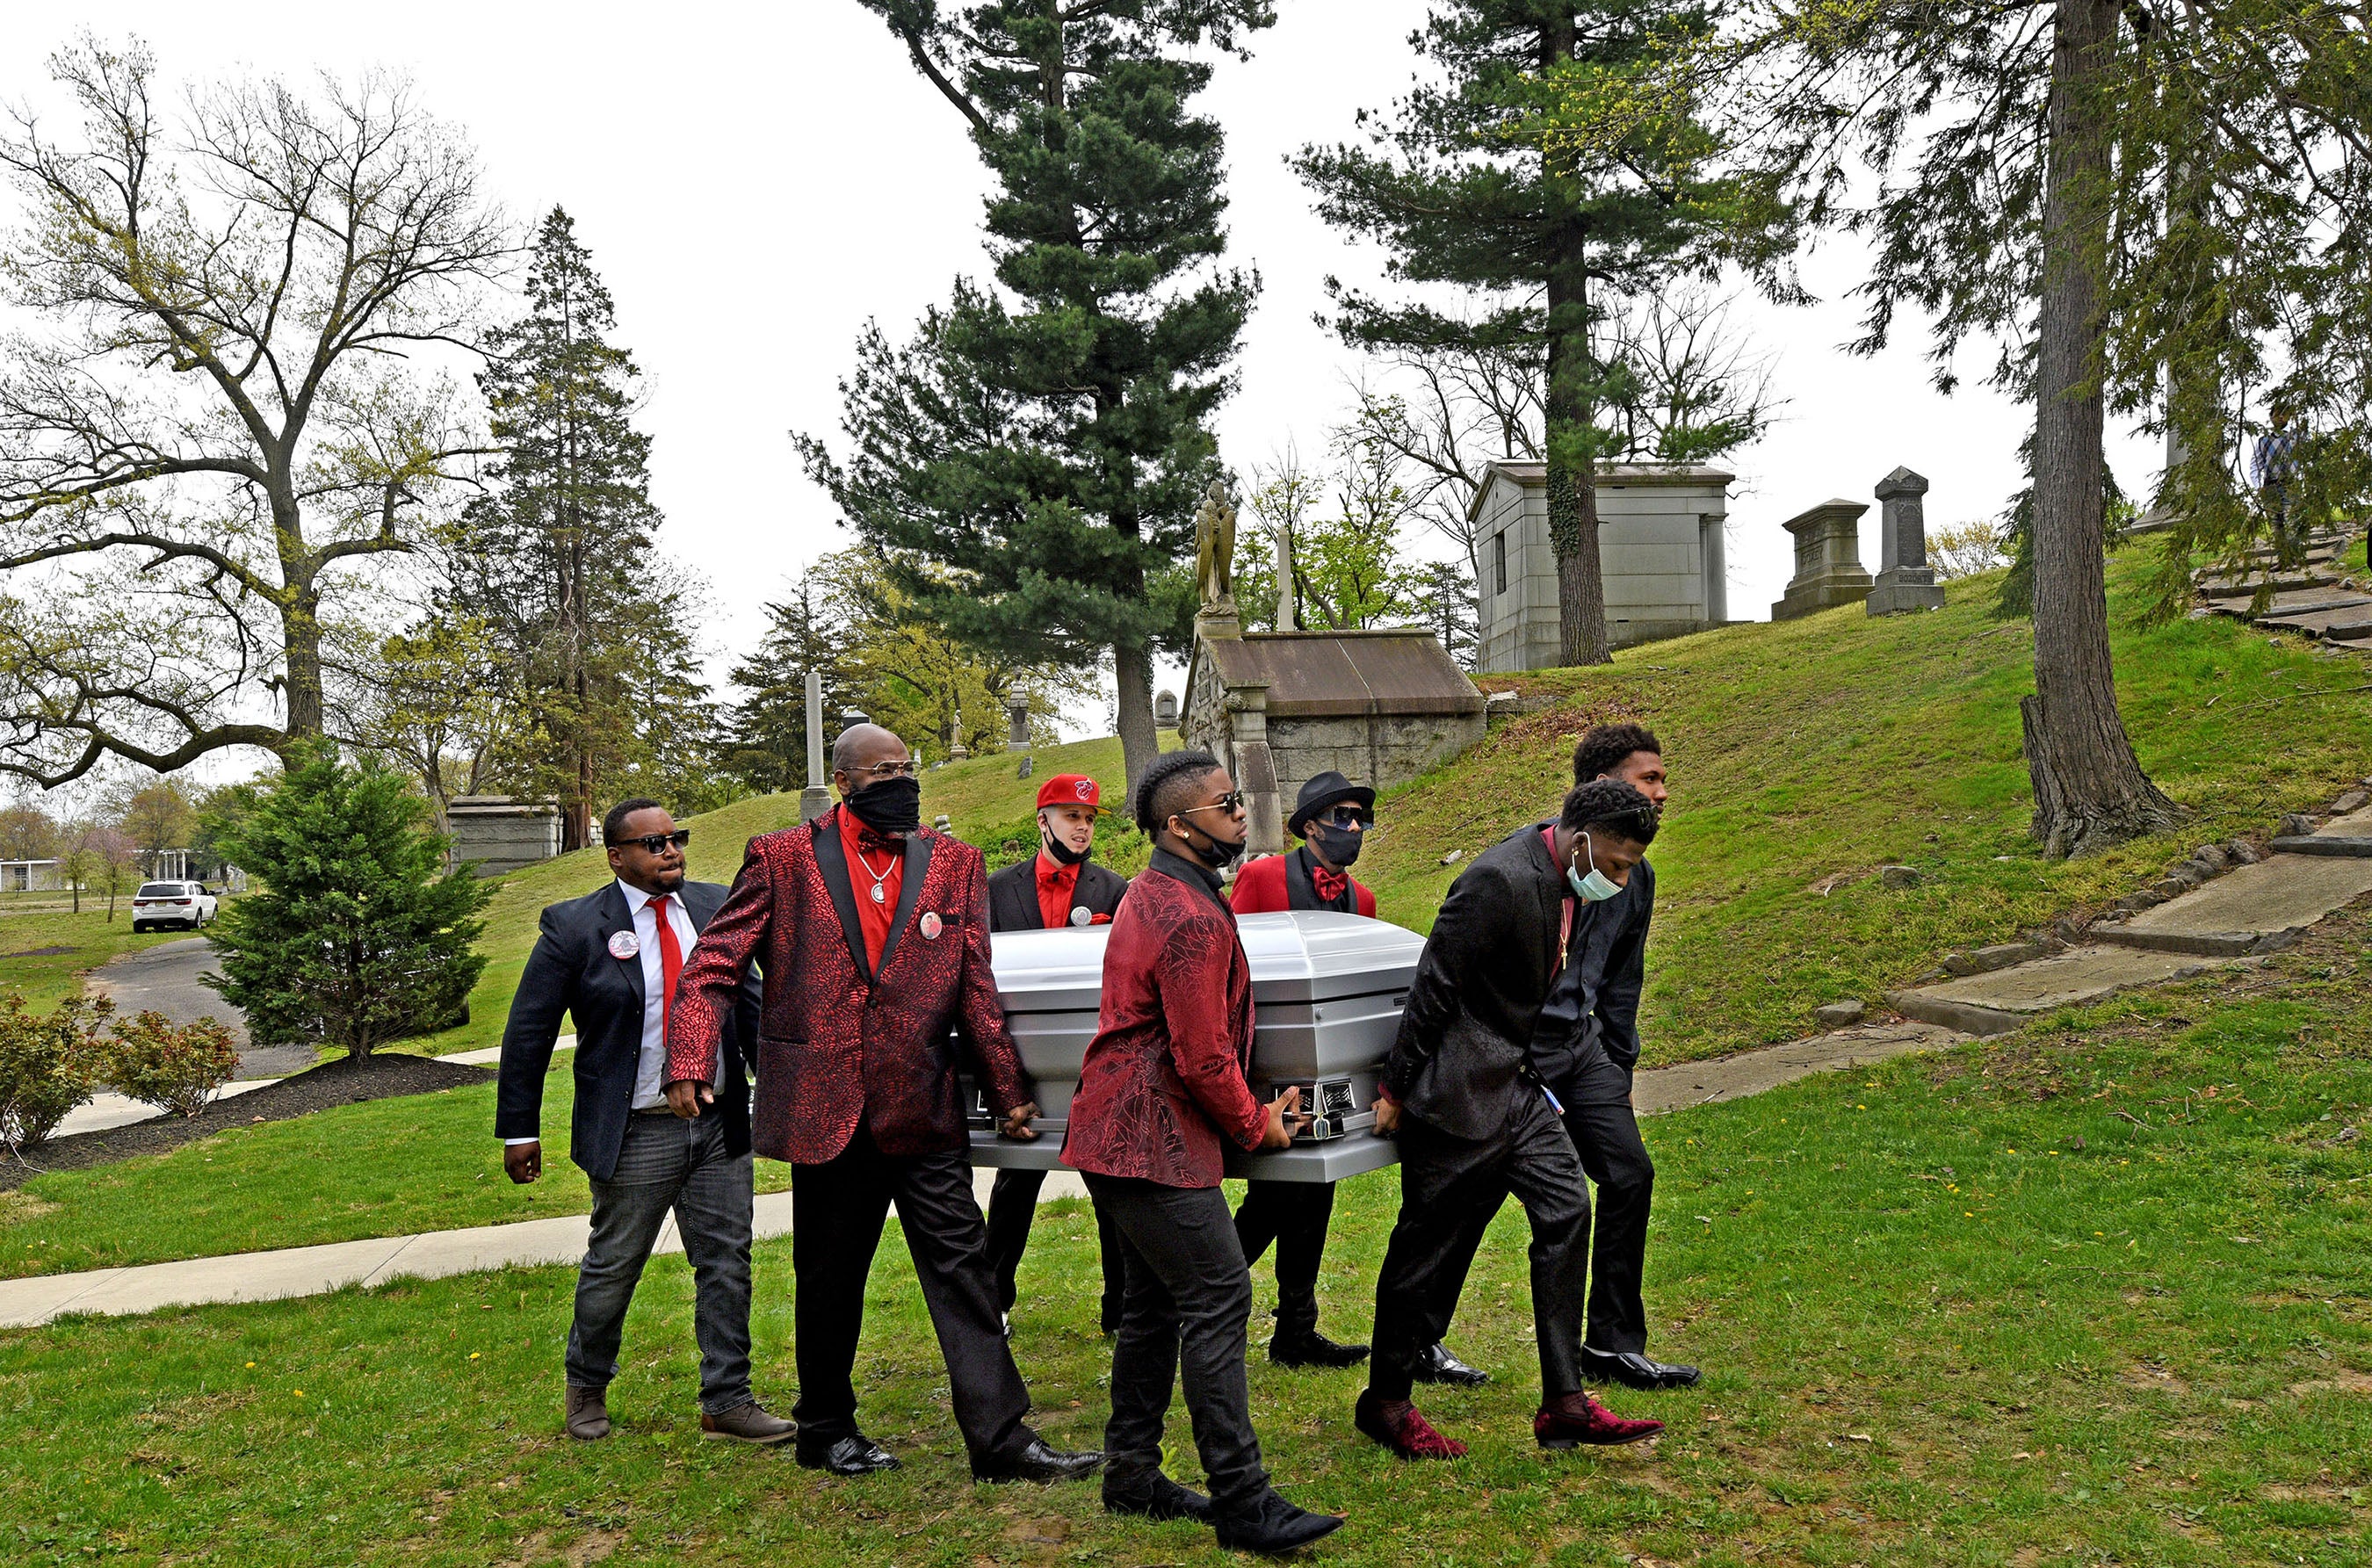 Pallbearers carry the casket of Nah'Jole Frazier